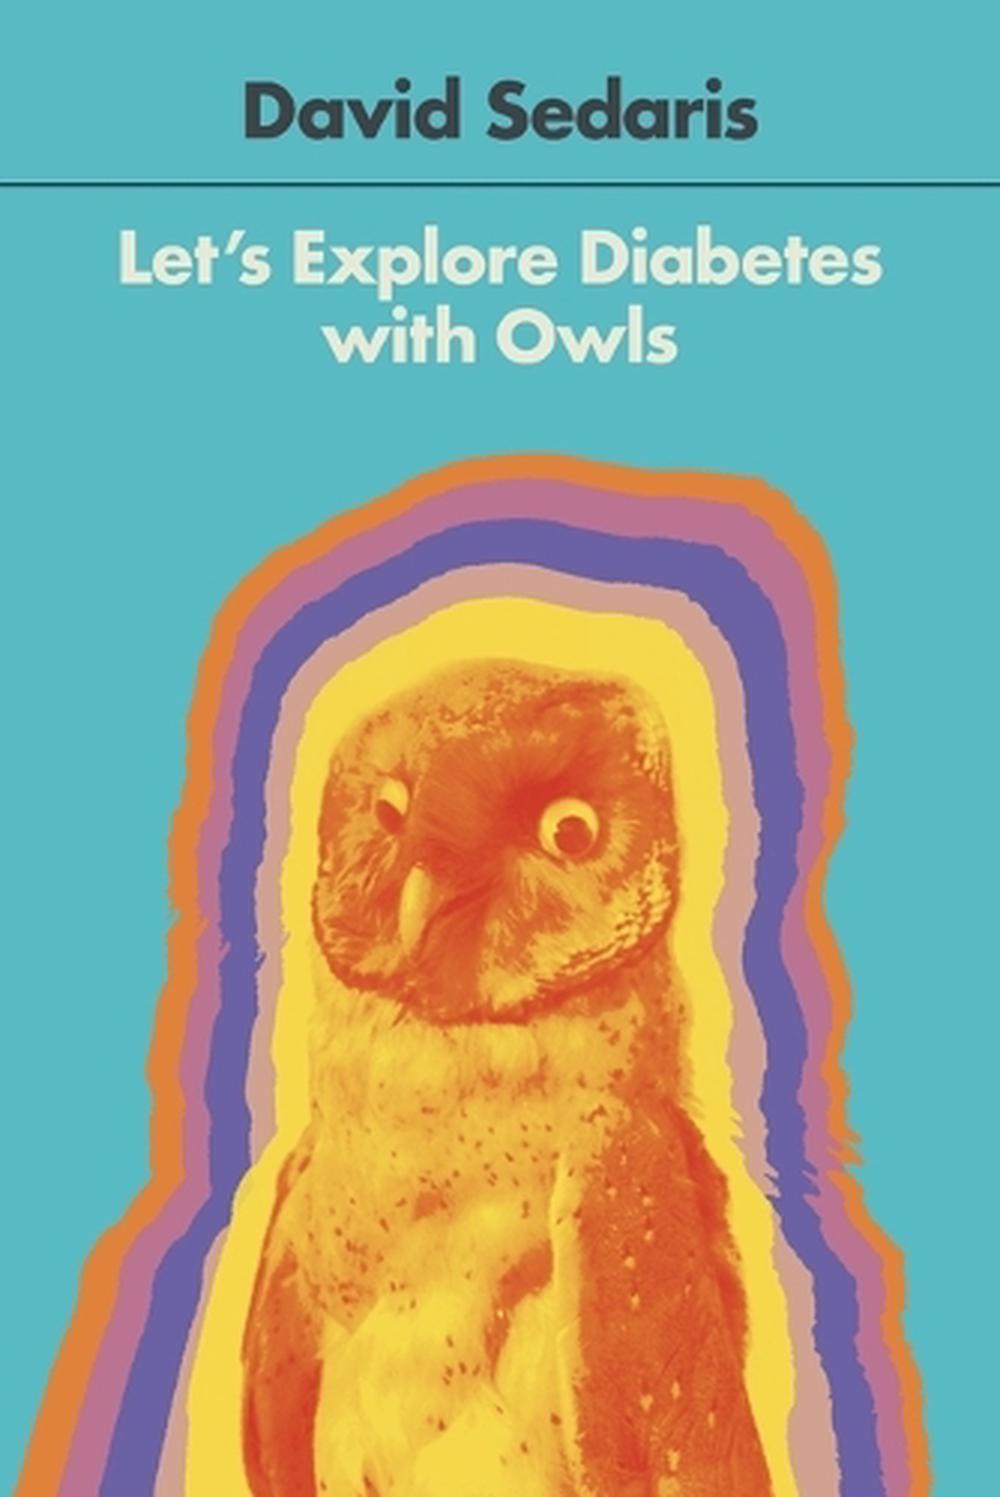 Sedaris,　Diabetes　Buy　by　Owls　with　The　Let's　Paperback,　at　9780316154703　Explore　online　David　Nile